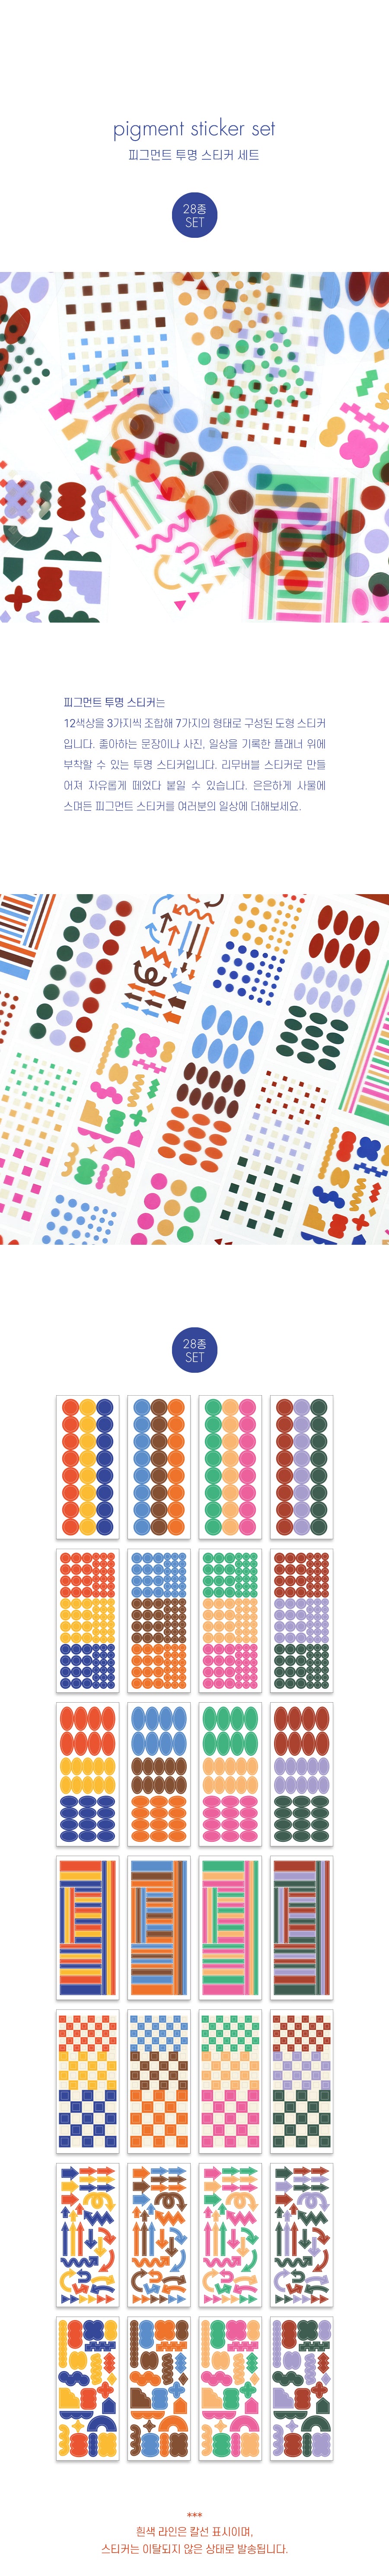 Pigment See-Thru Sticker 7 Designs Set 28 Sheets Paperian 2 Planner Stickers, Decorative Stickers Hunter & The Scholar